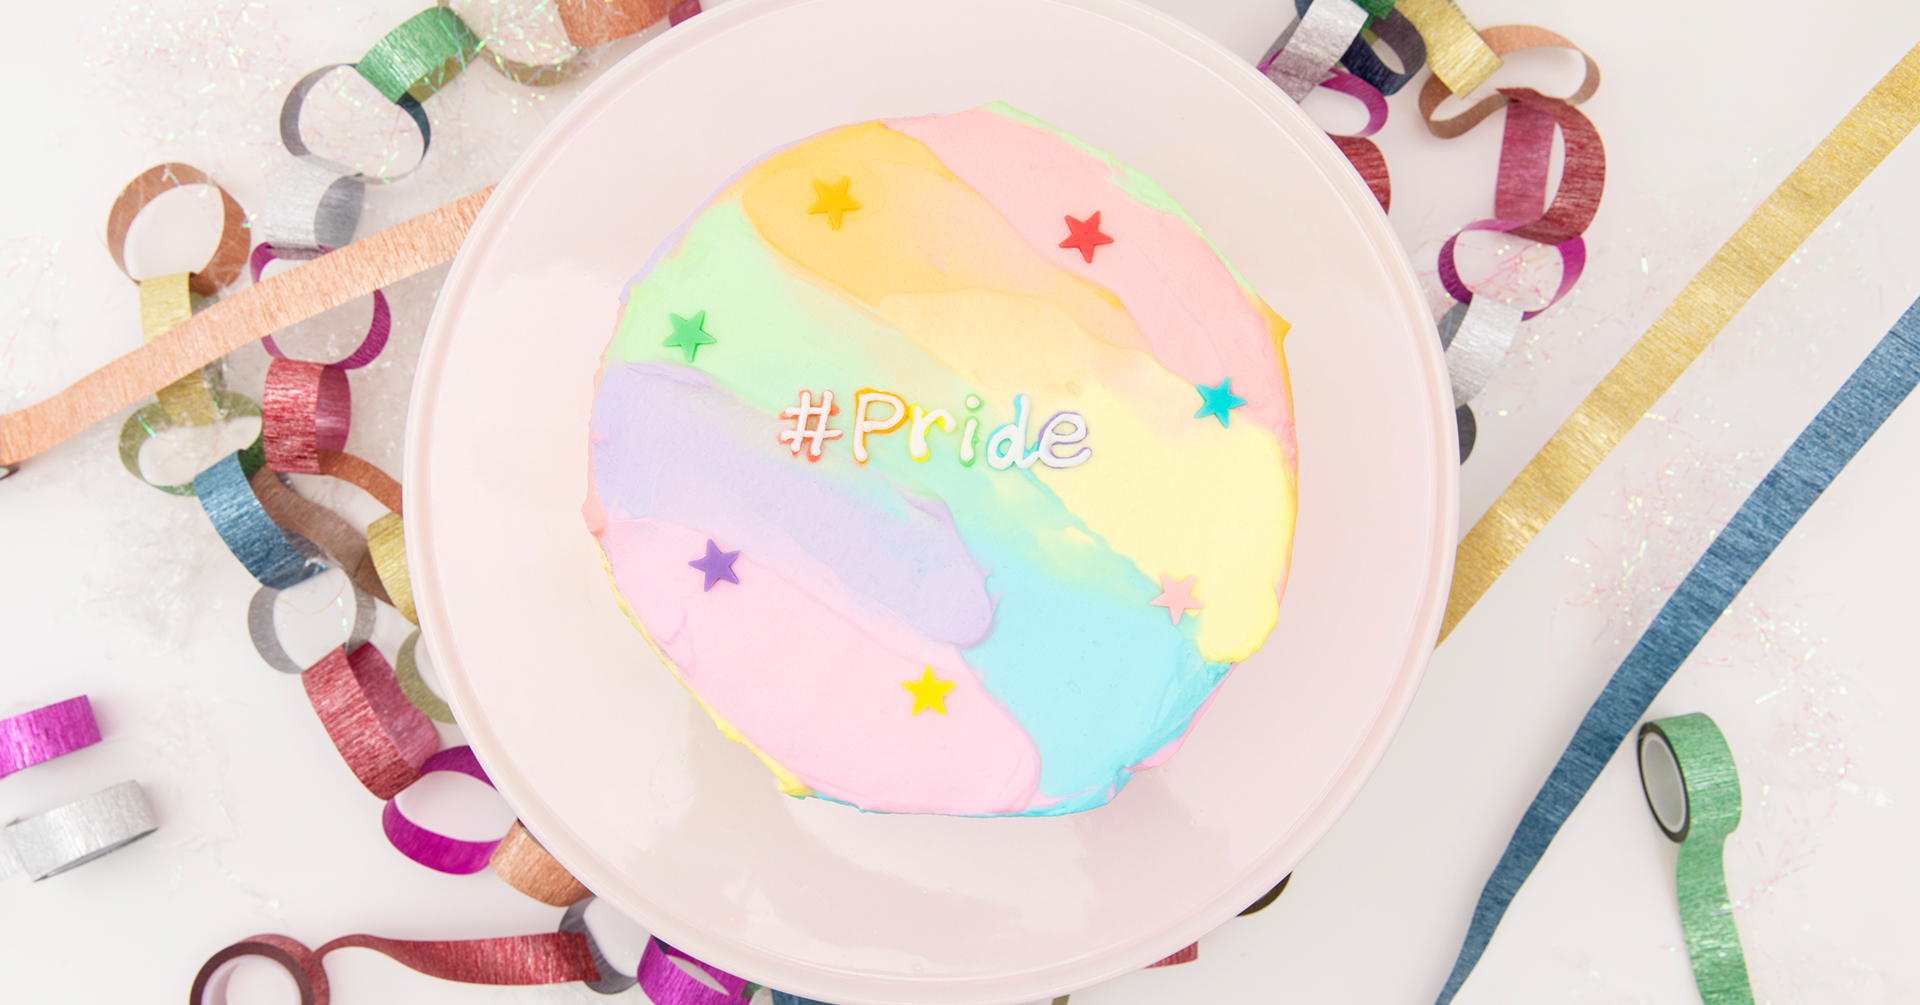 Cake with #Pride オーダーメイドケーキ1